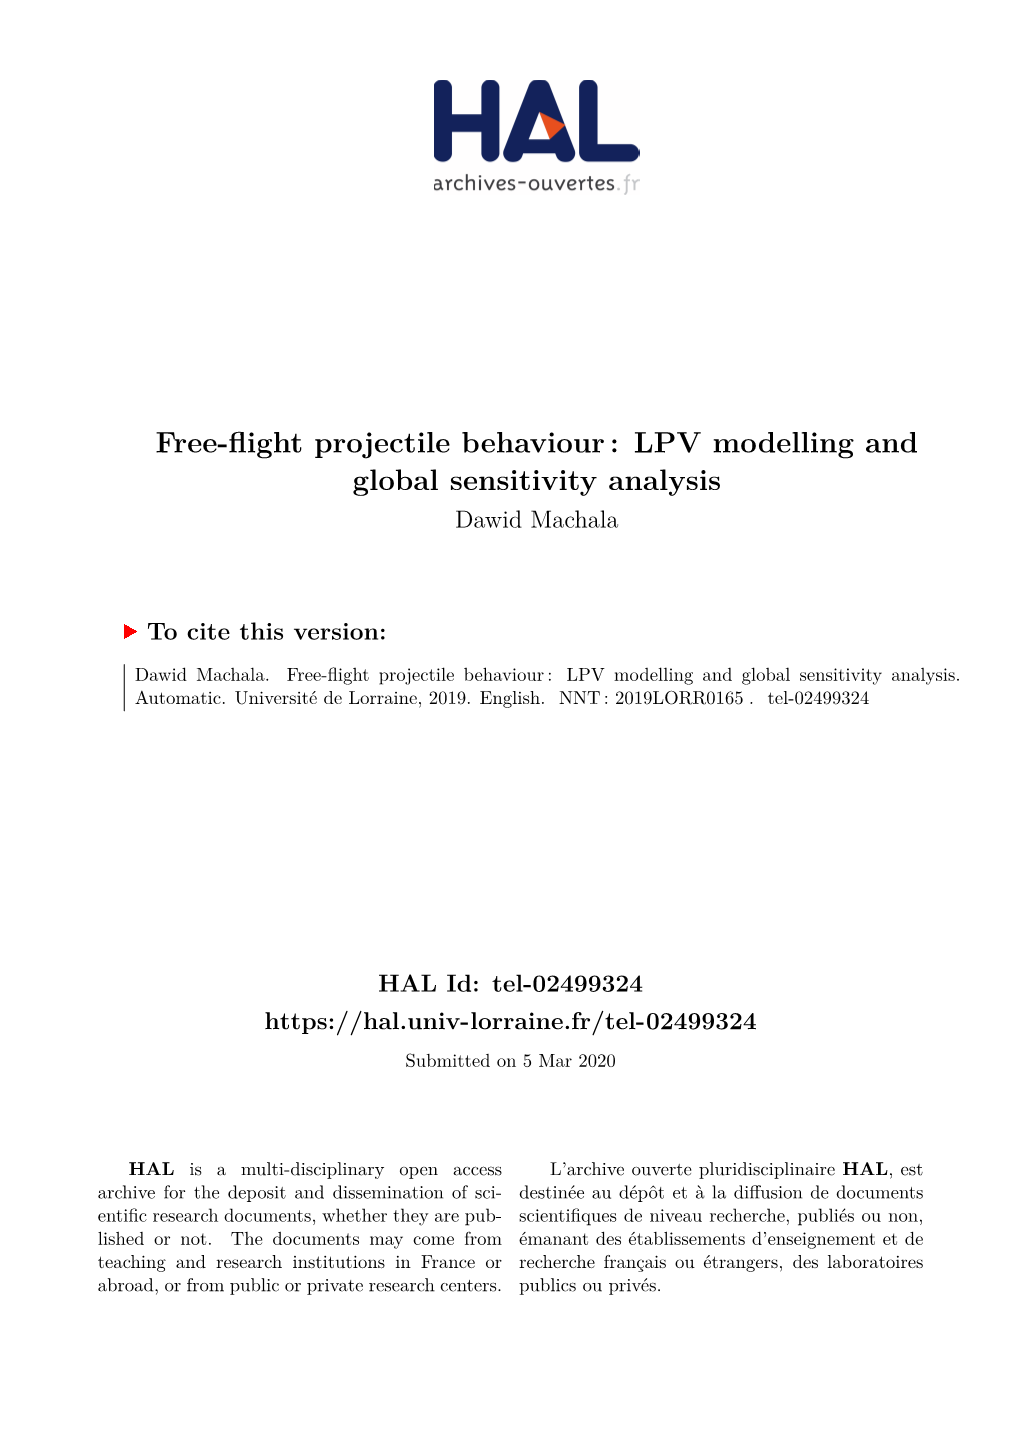 Free-Flight Projectile Behaviour: LPV Modelling and Global Sensitivity